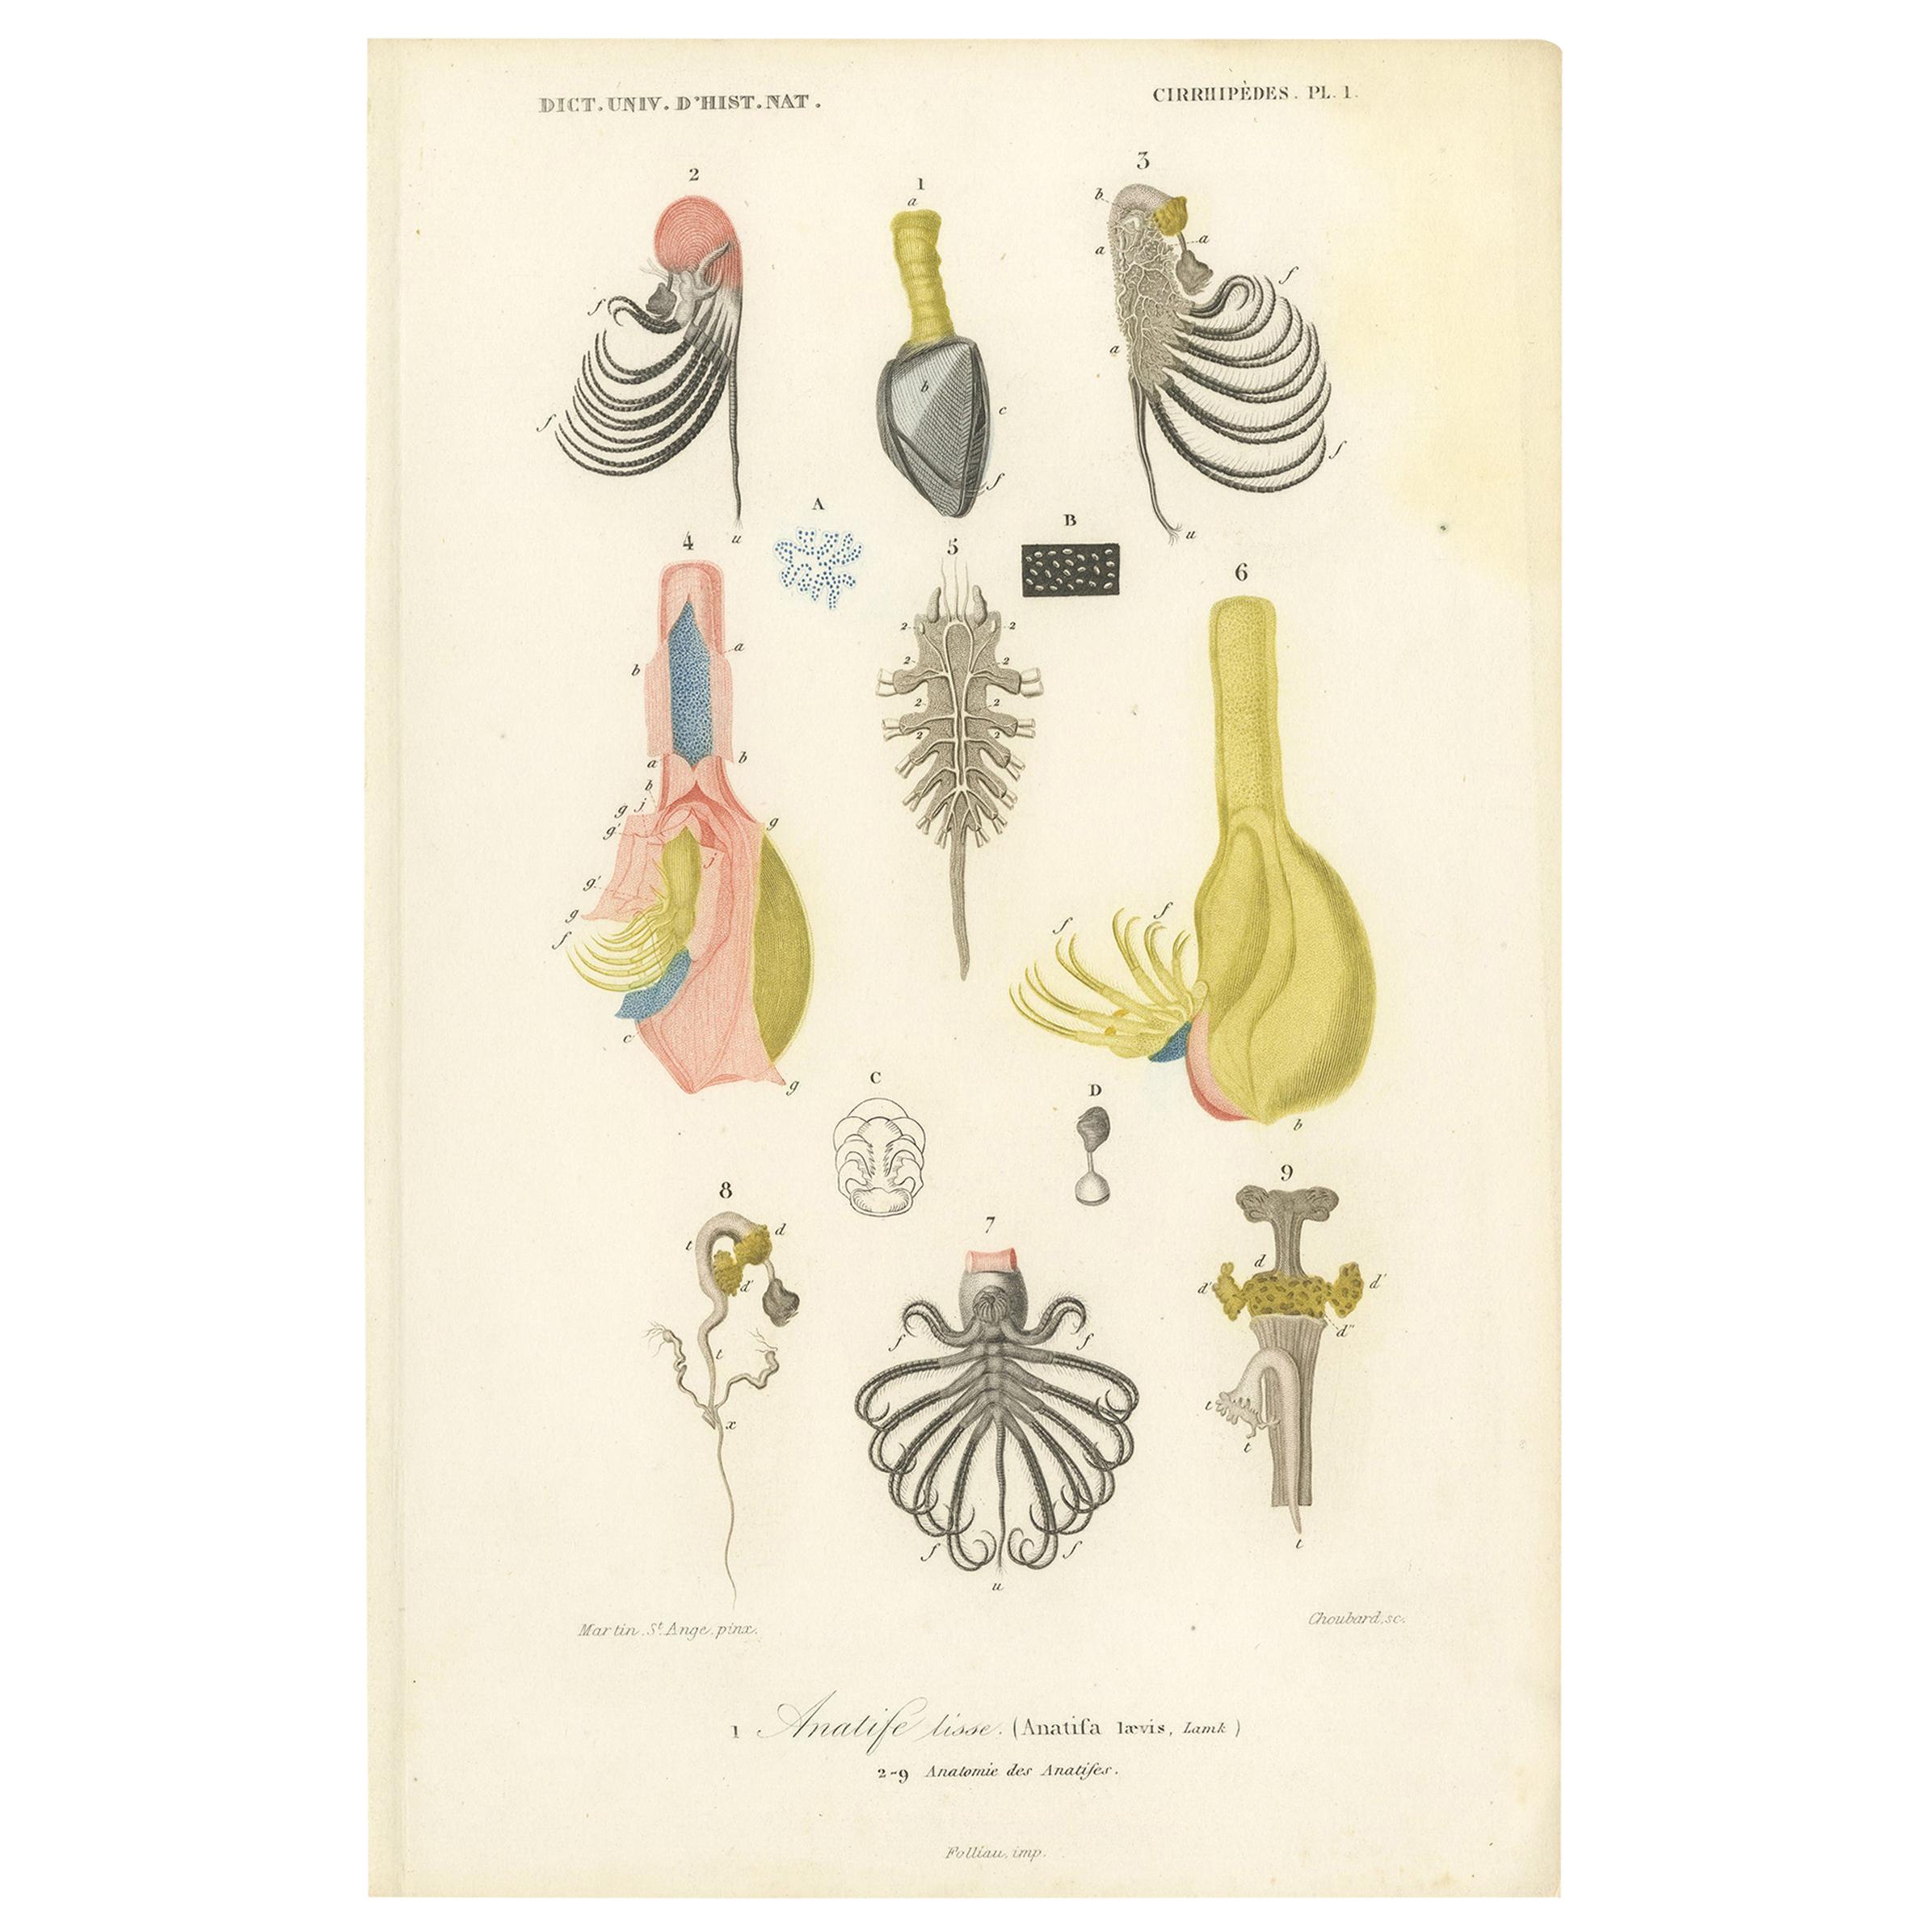 Antique Print of the Pelagic Gooseneck Barnacle by Orbigny '1849'